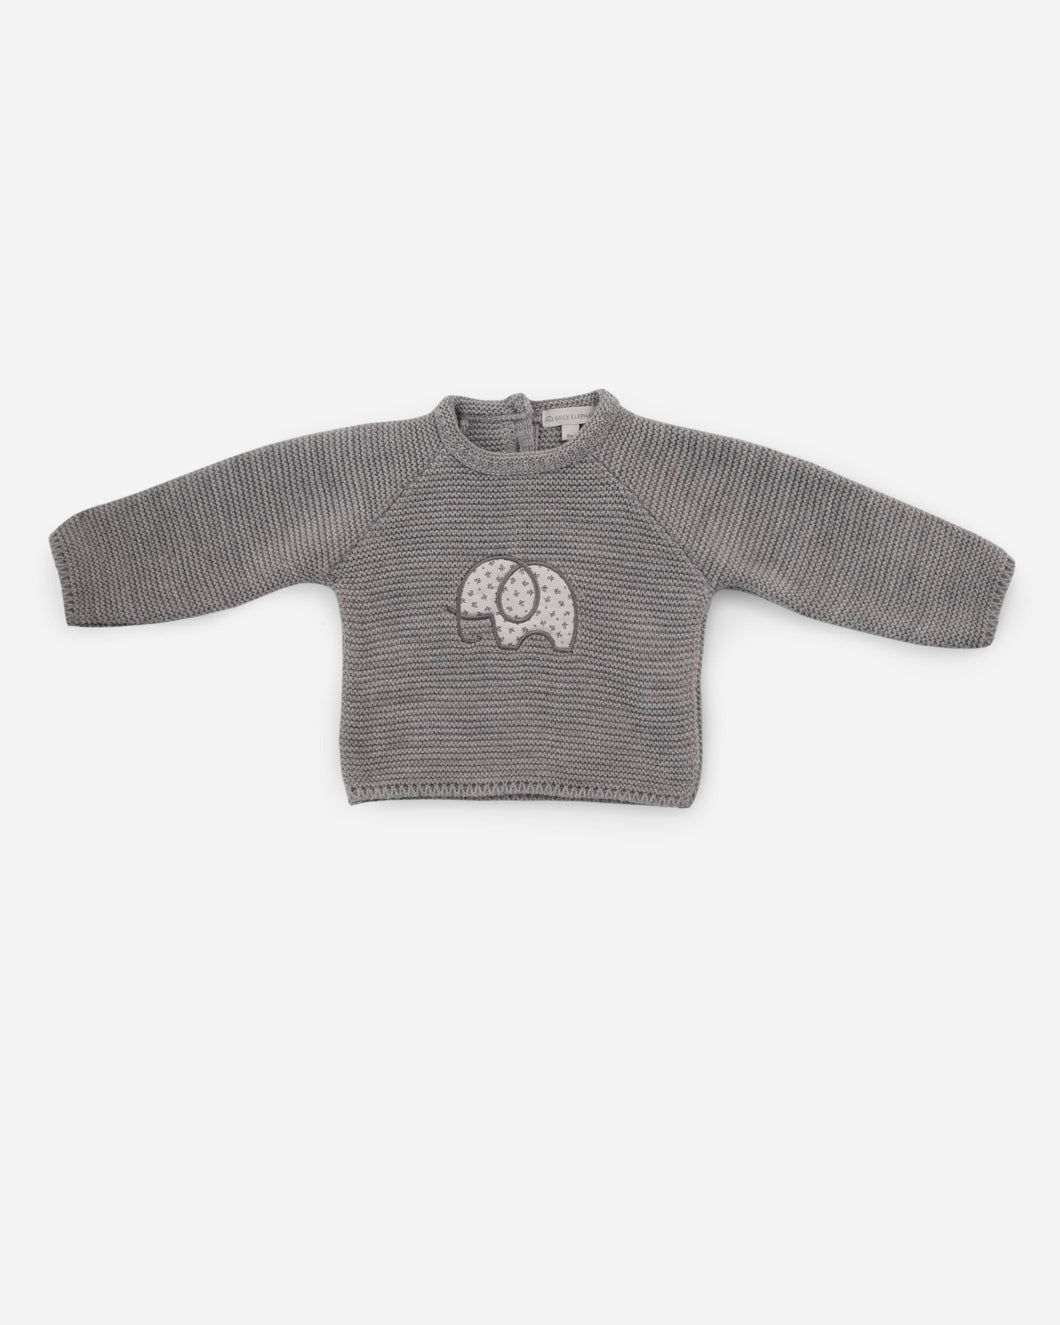 Grey Elephant The Original GE Sweater by Grey Elephant